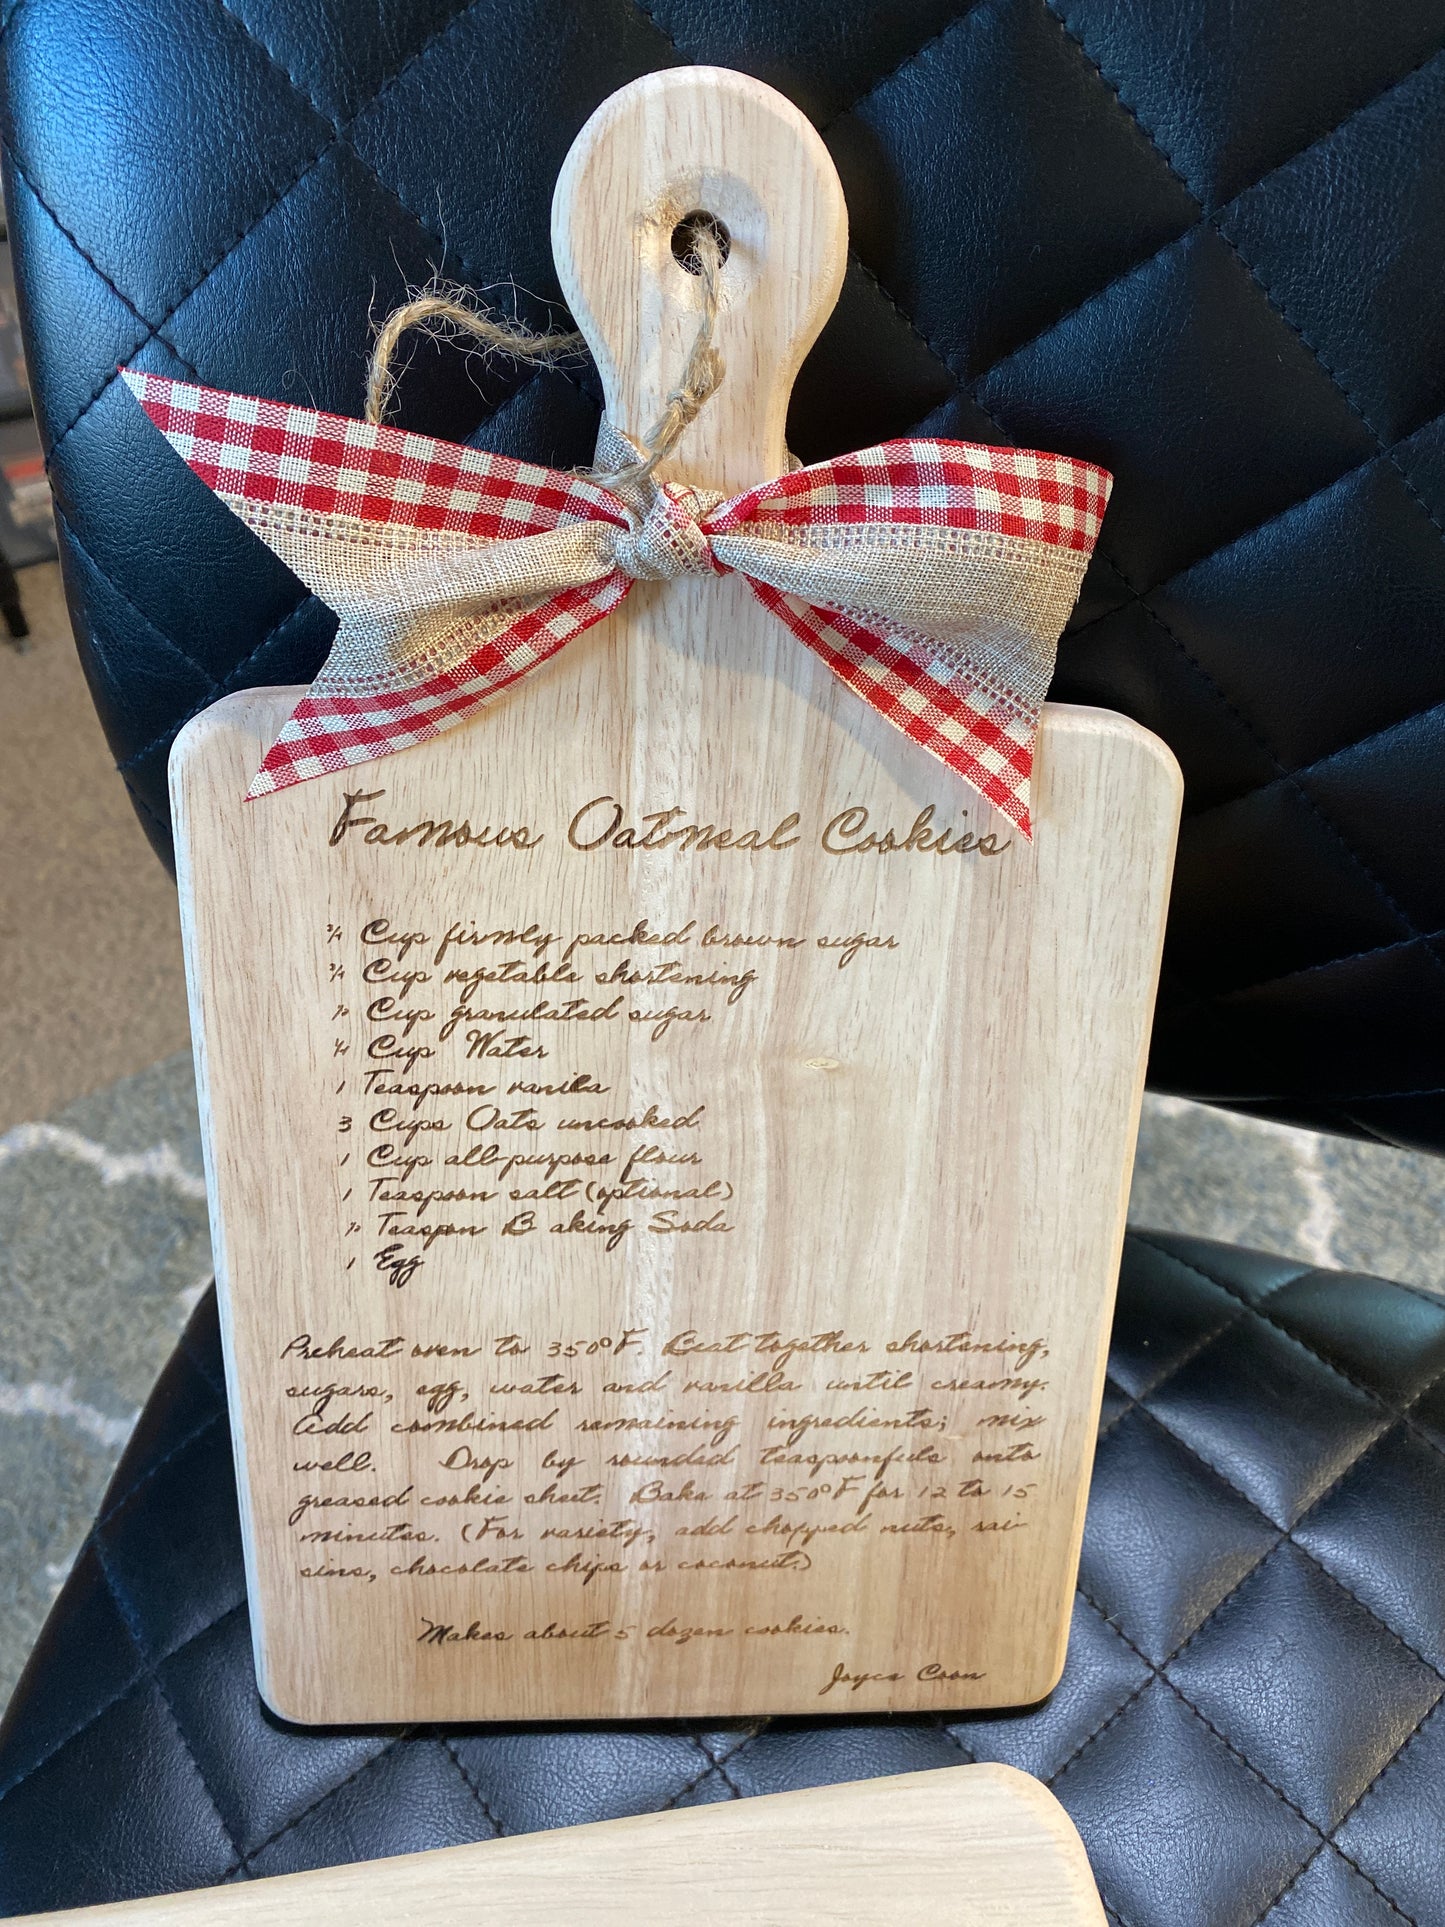 Personalized cutting board/pie dish with handwritten recipe